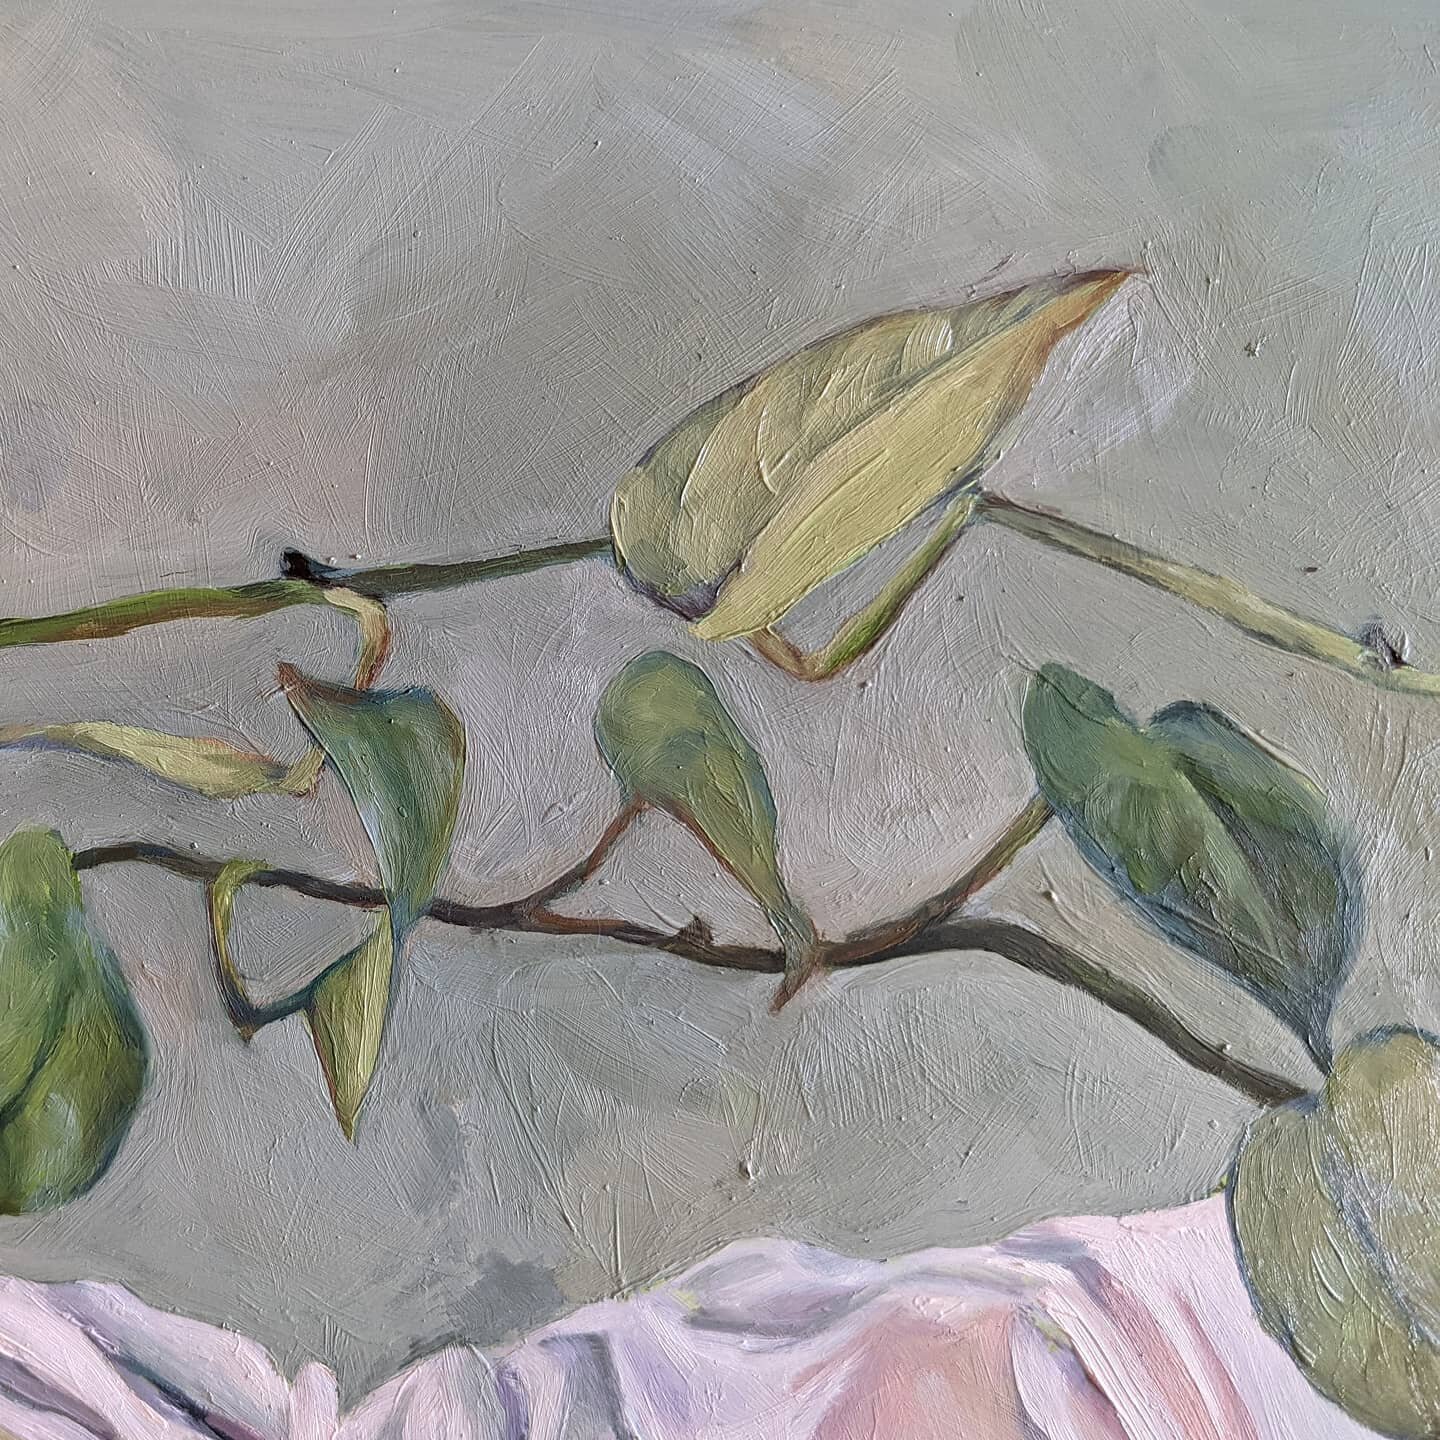 Some leaf details and brushstroke textures 
🎨🌿
.
#oils #oilpainting #oilonwood #brushstrokes #wip #artistsprocess #paintporn #art #paintanyway #plantart #pothos #devilsivy #greenpalette